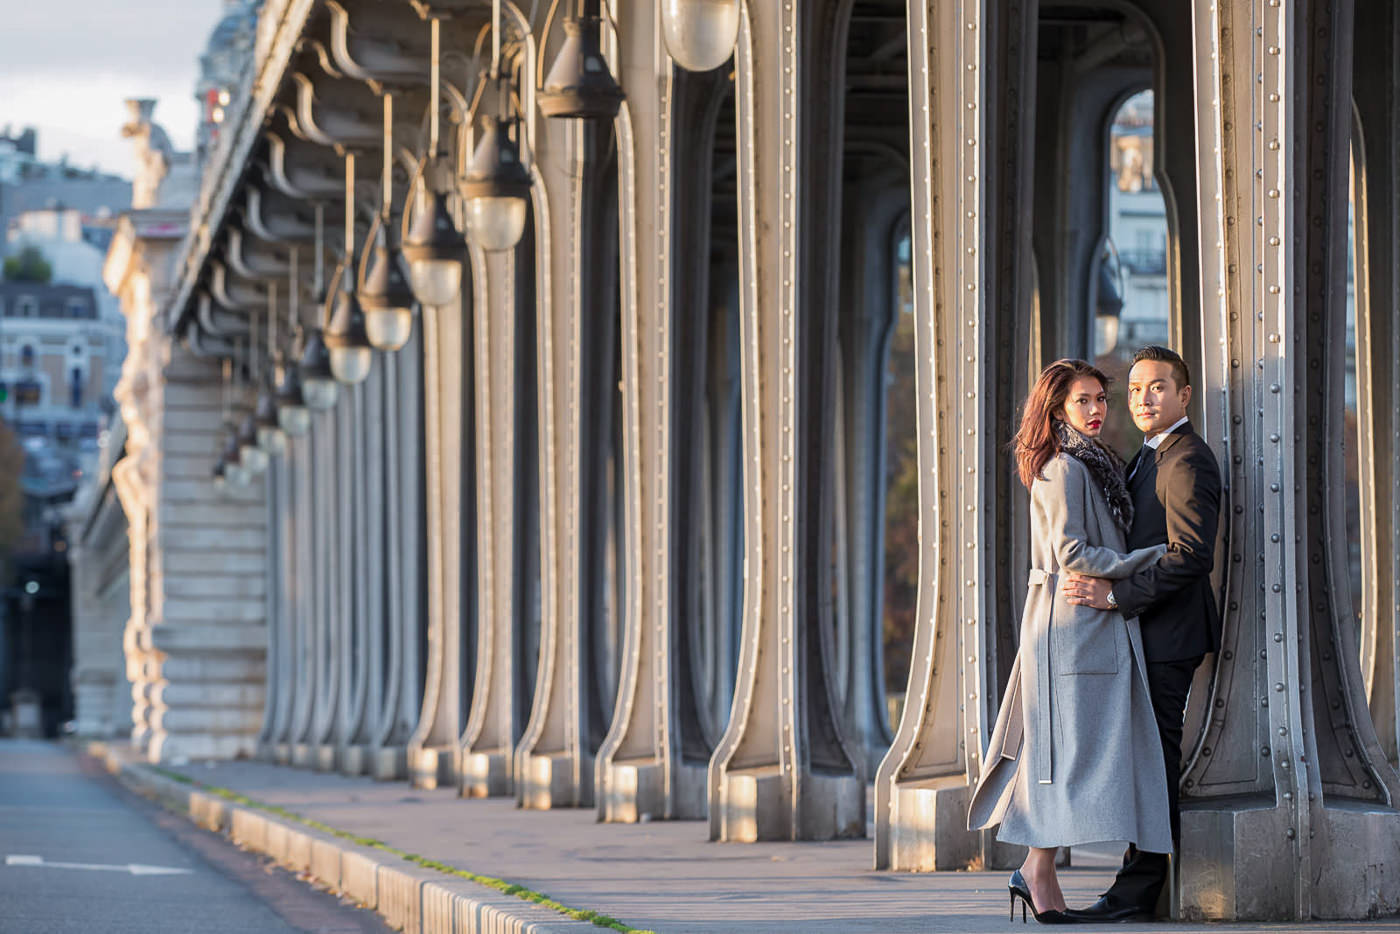 Dreamy couple photo taken at the Bir Hakeim Bridge in Paris